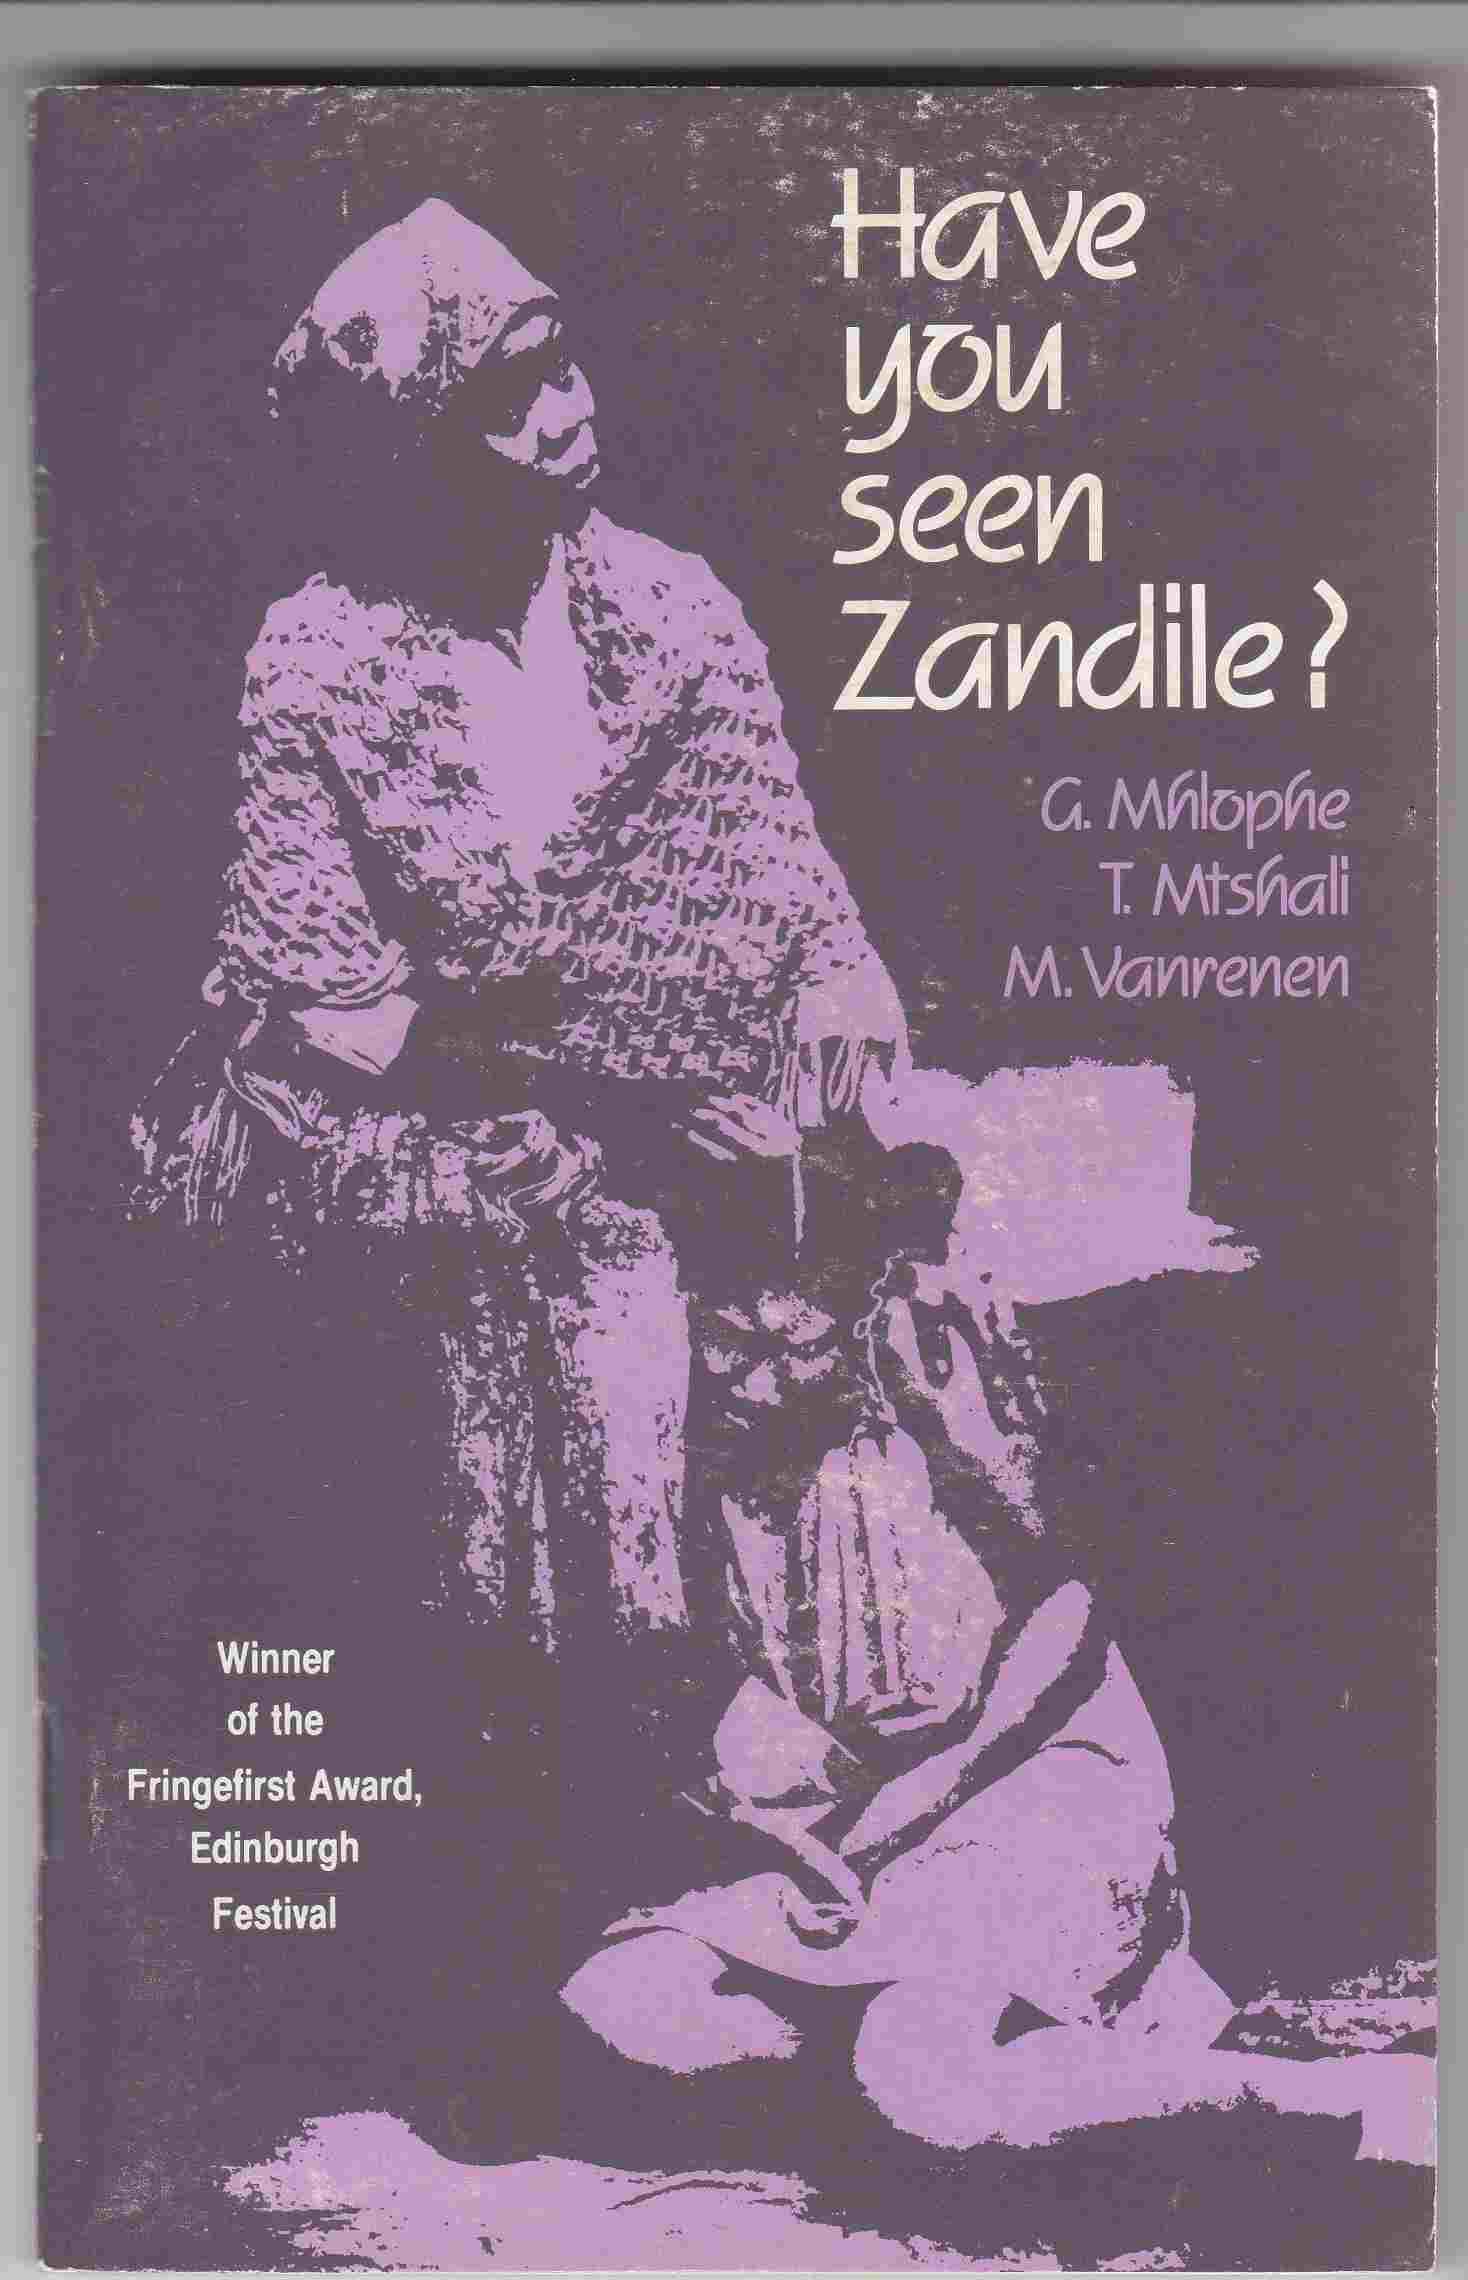 have you seen zandile essay